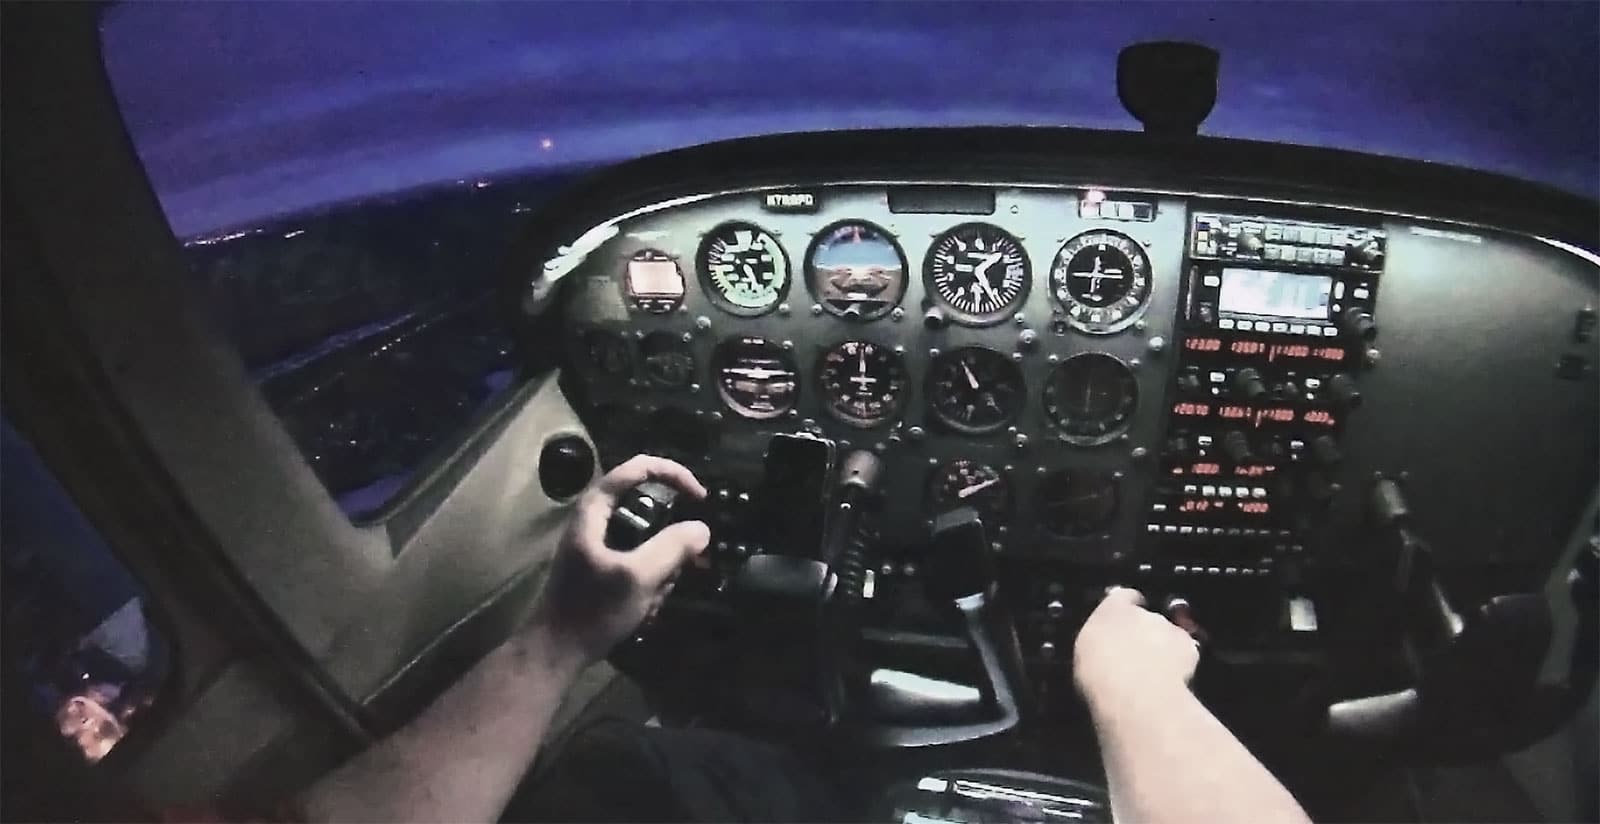 The cockpit of a similar Cessna light aircraft at night.